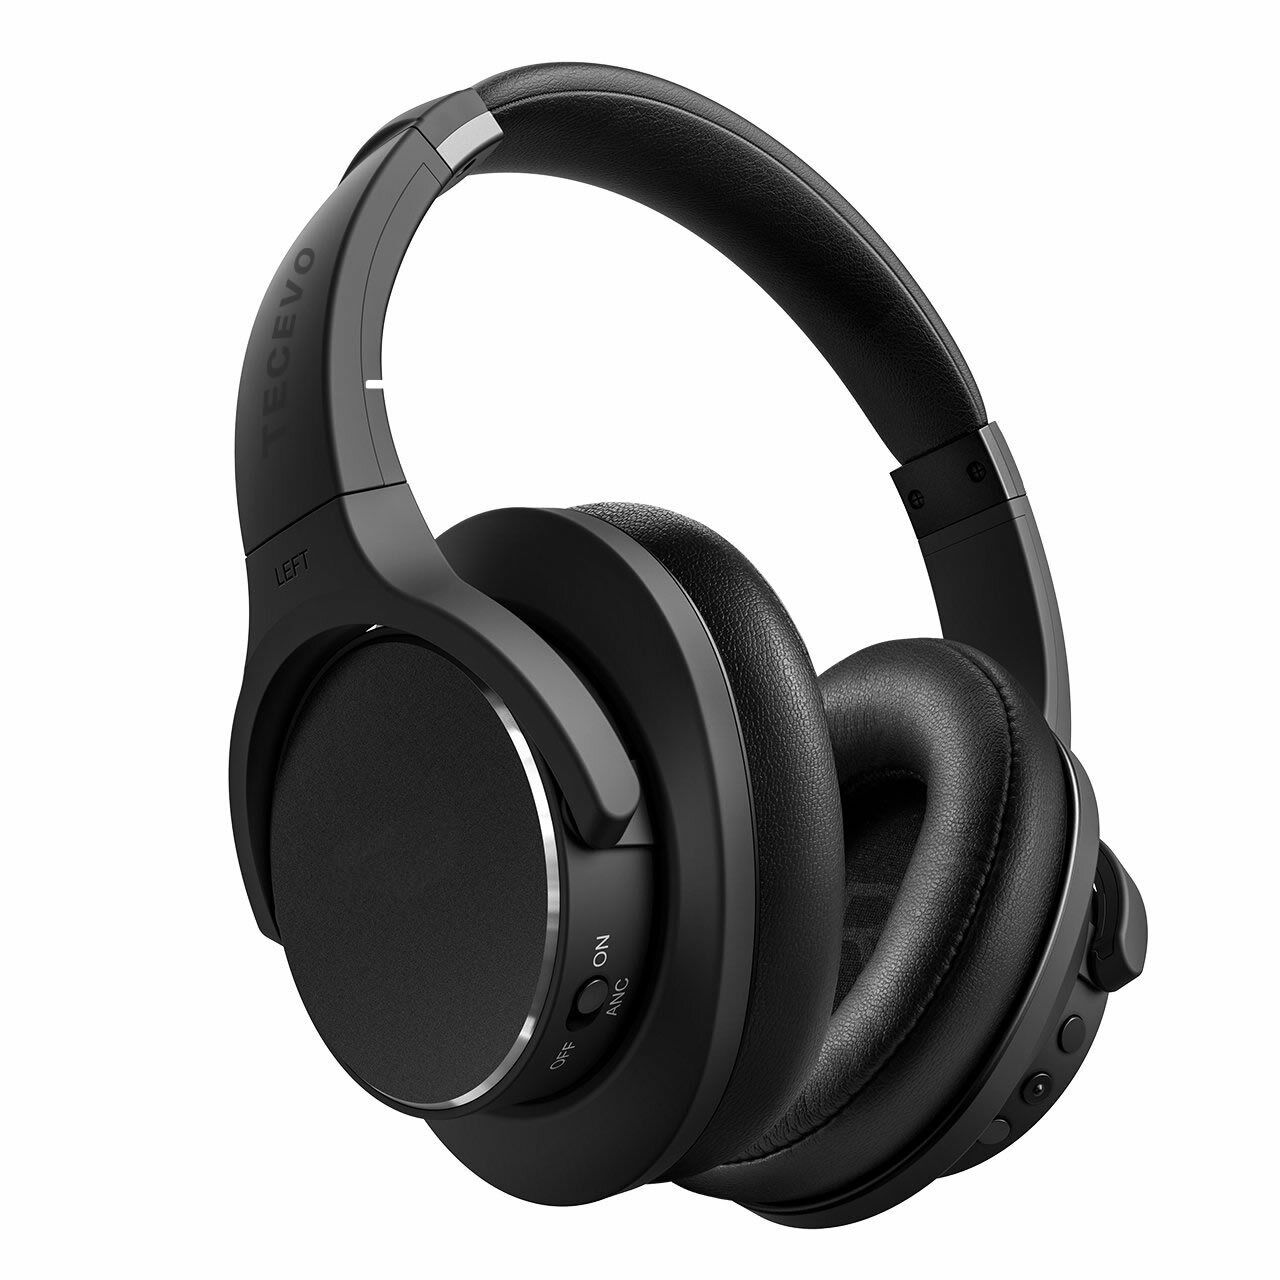 TECEVO Z4 ANC Wireless Over-ear Headphones